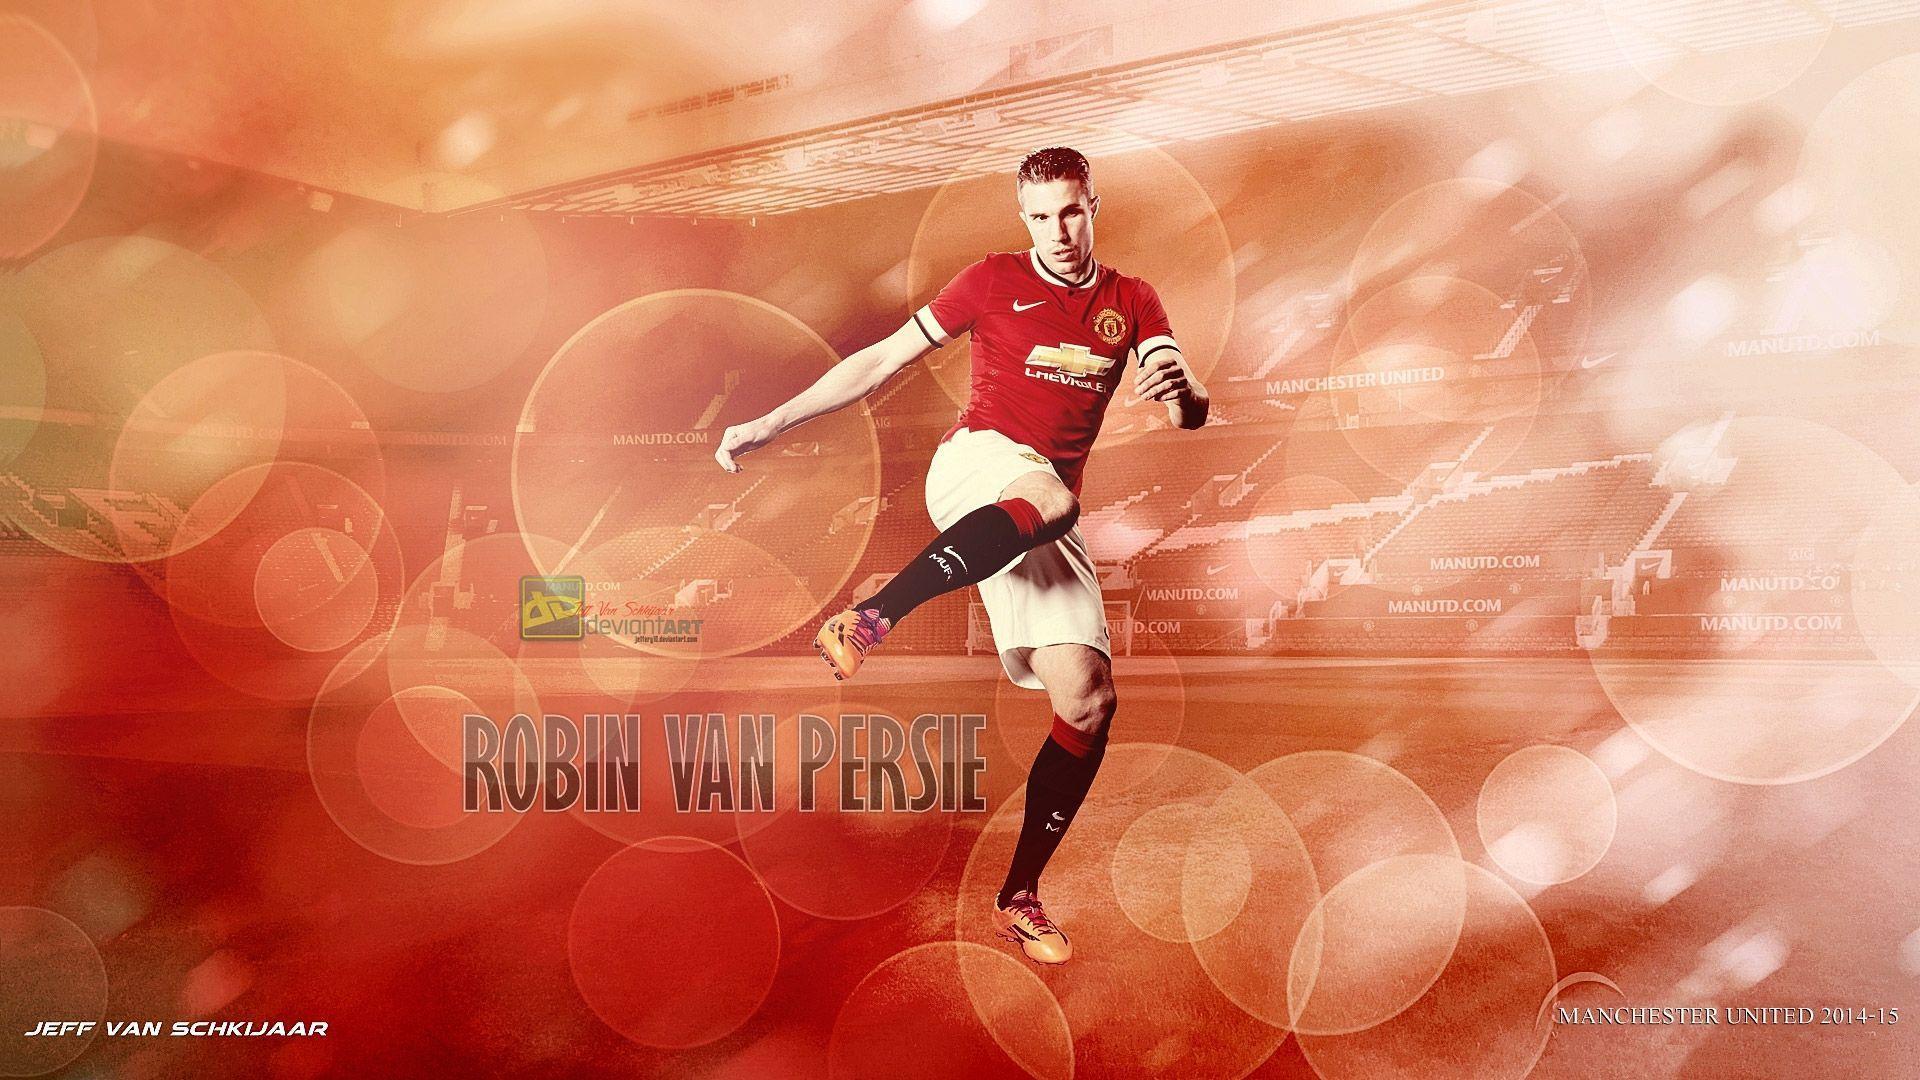 Free Wallpaper Van Persie Manchester United 2014 2015